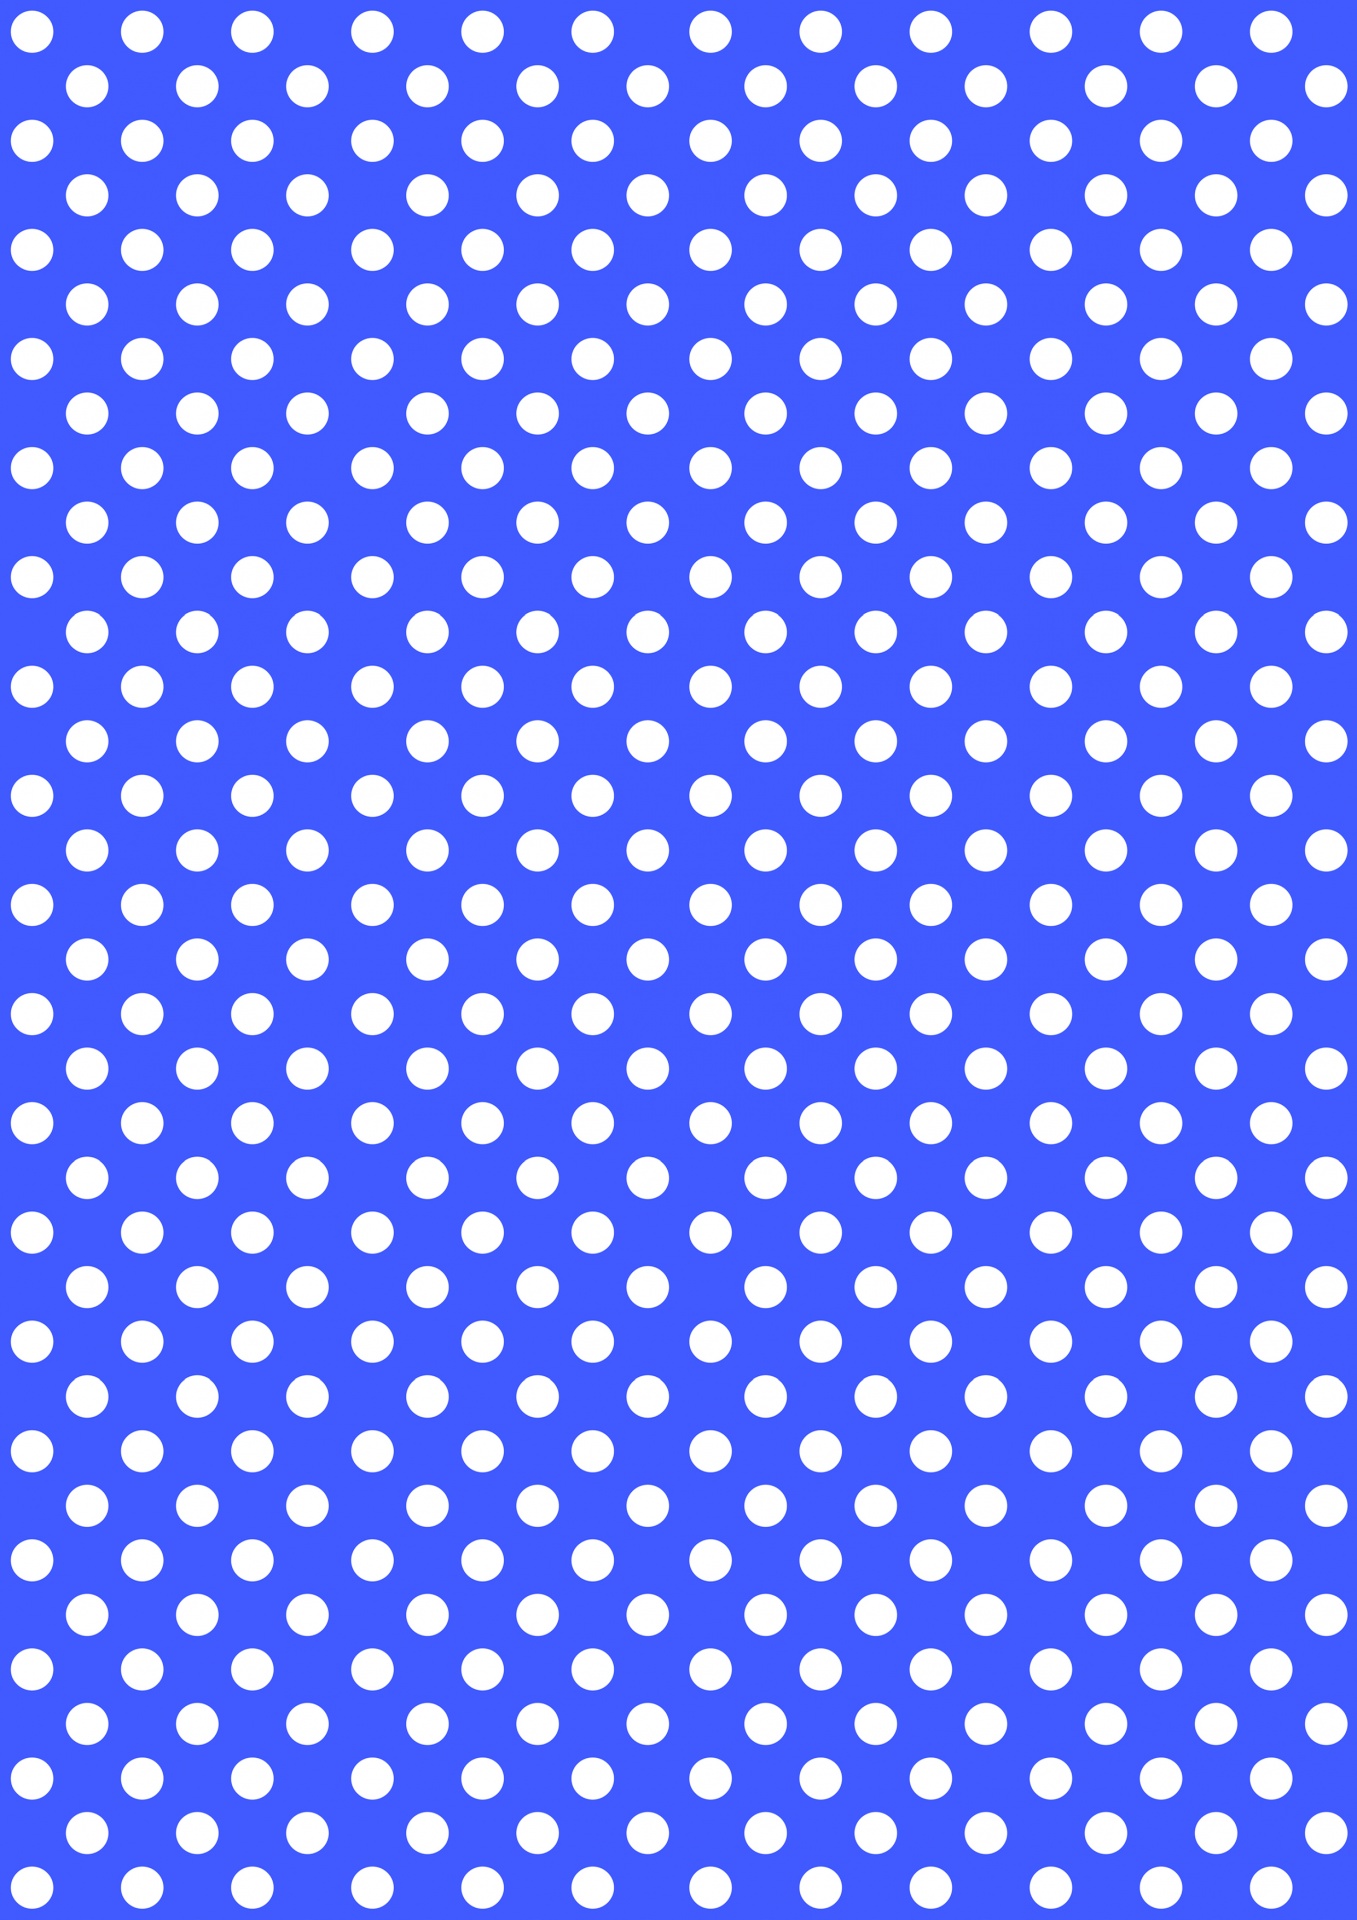 polka background polka dot free photo